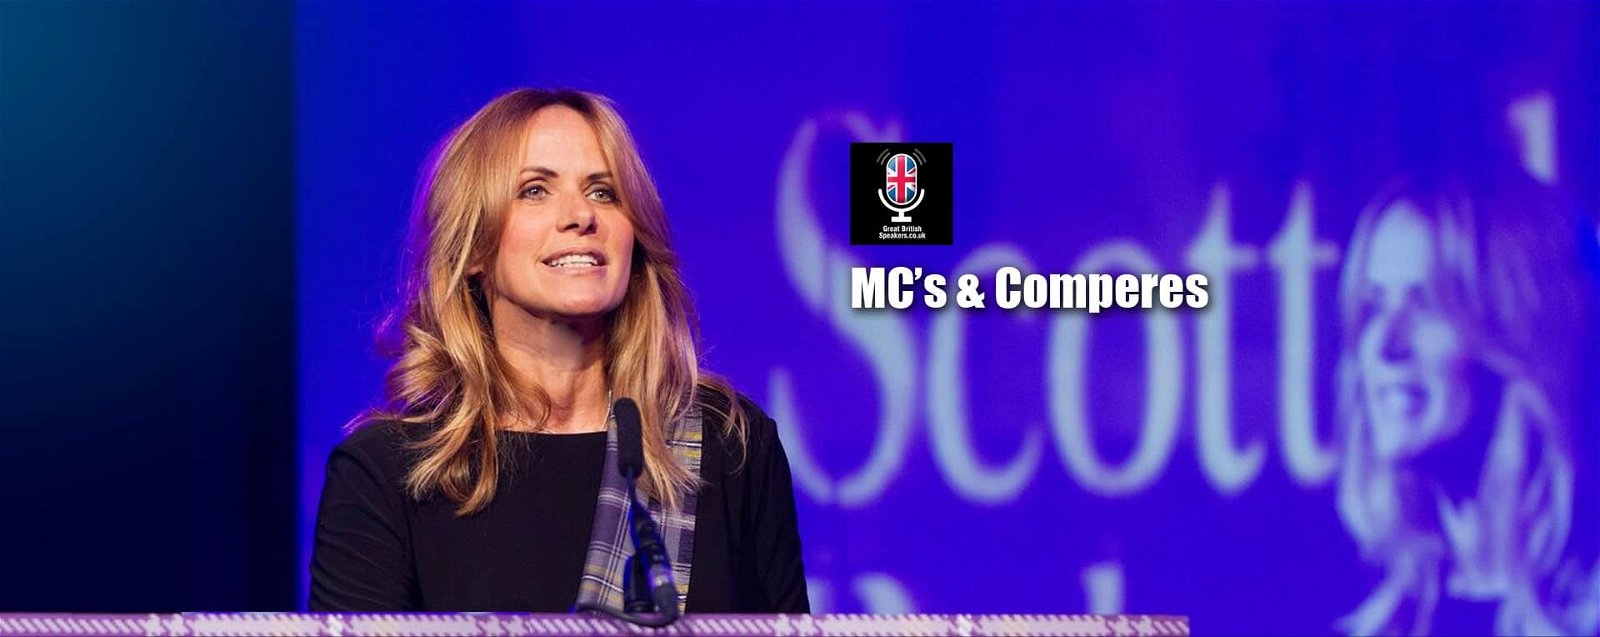 MCs & Comperes Slider Great British Speakers-min